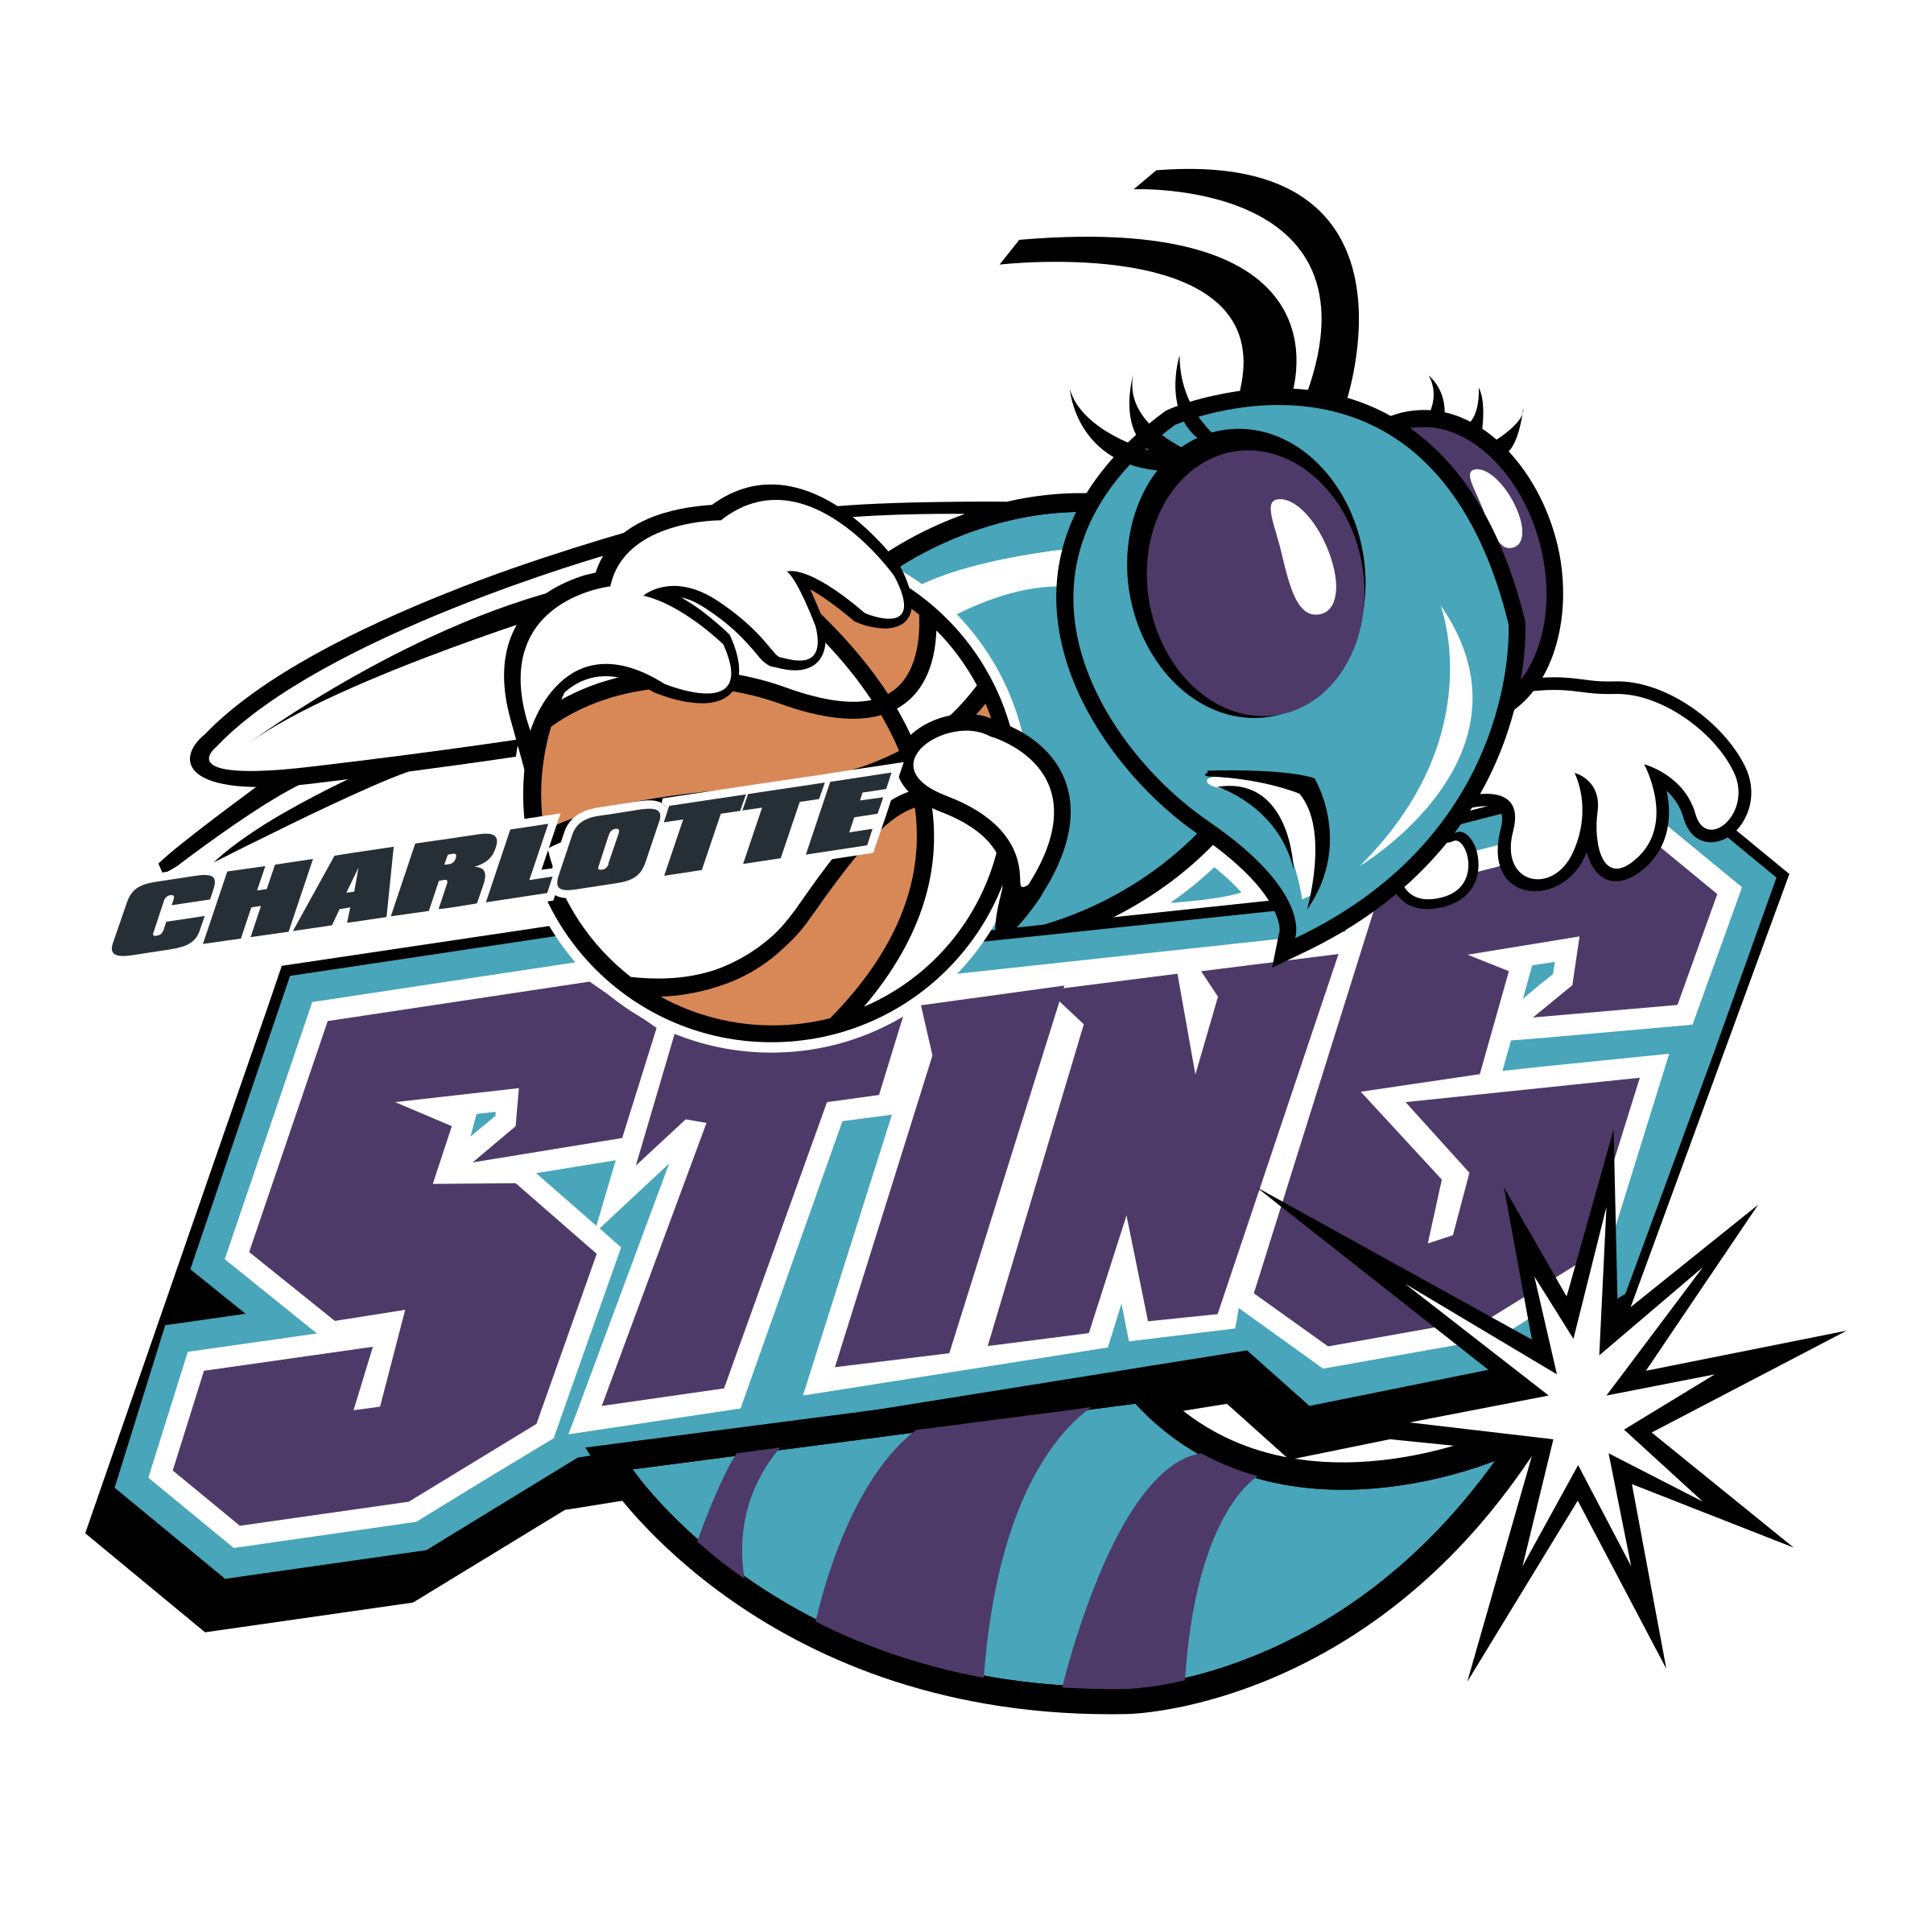 Sting Logo - Charlotte Sting Logo PNG Transparent & SVG Vector - Freebie Supply